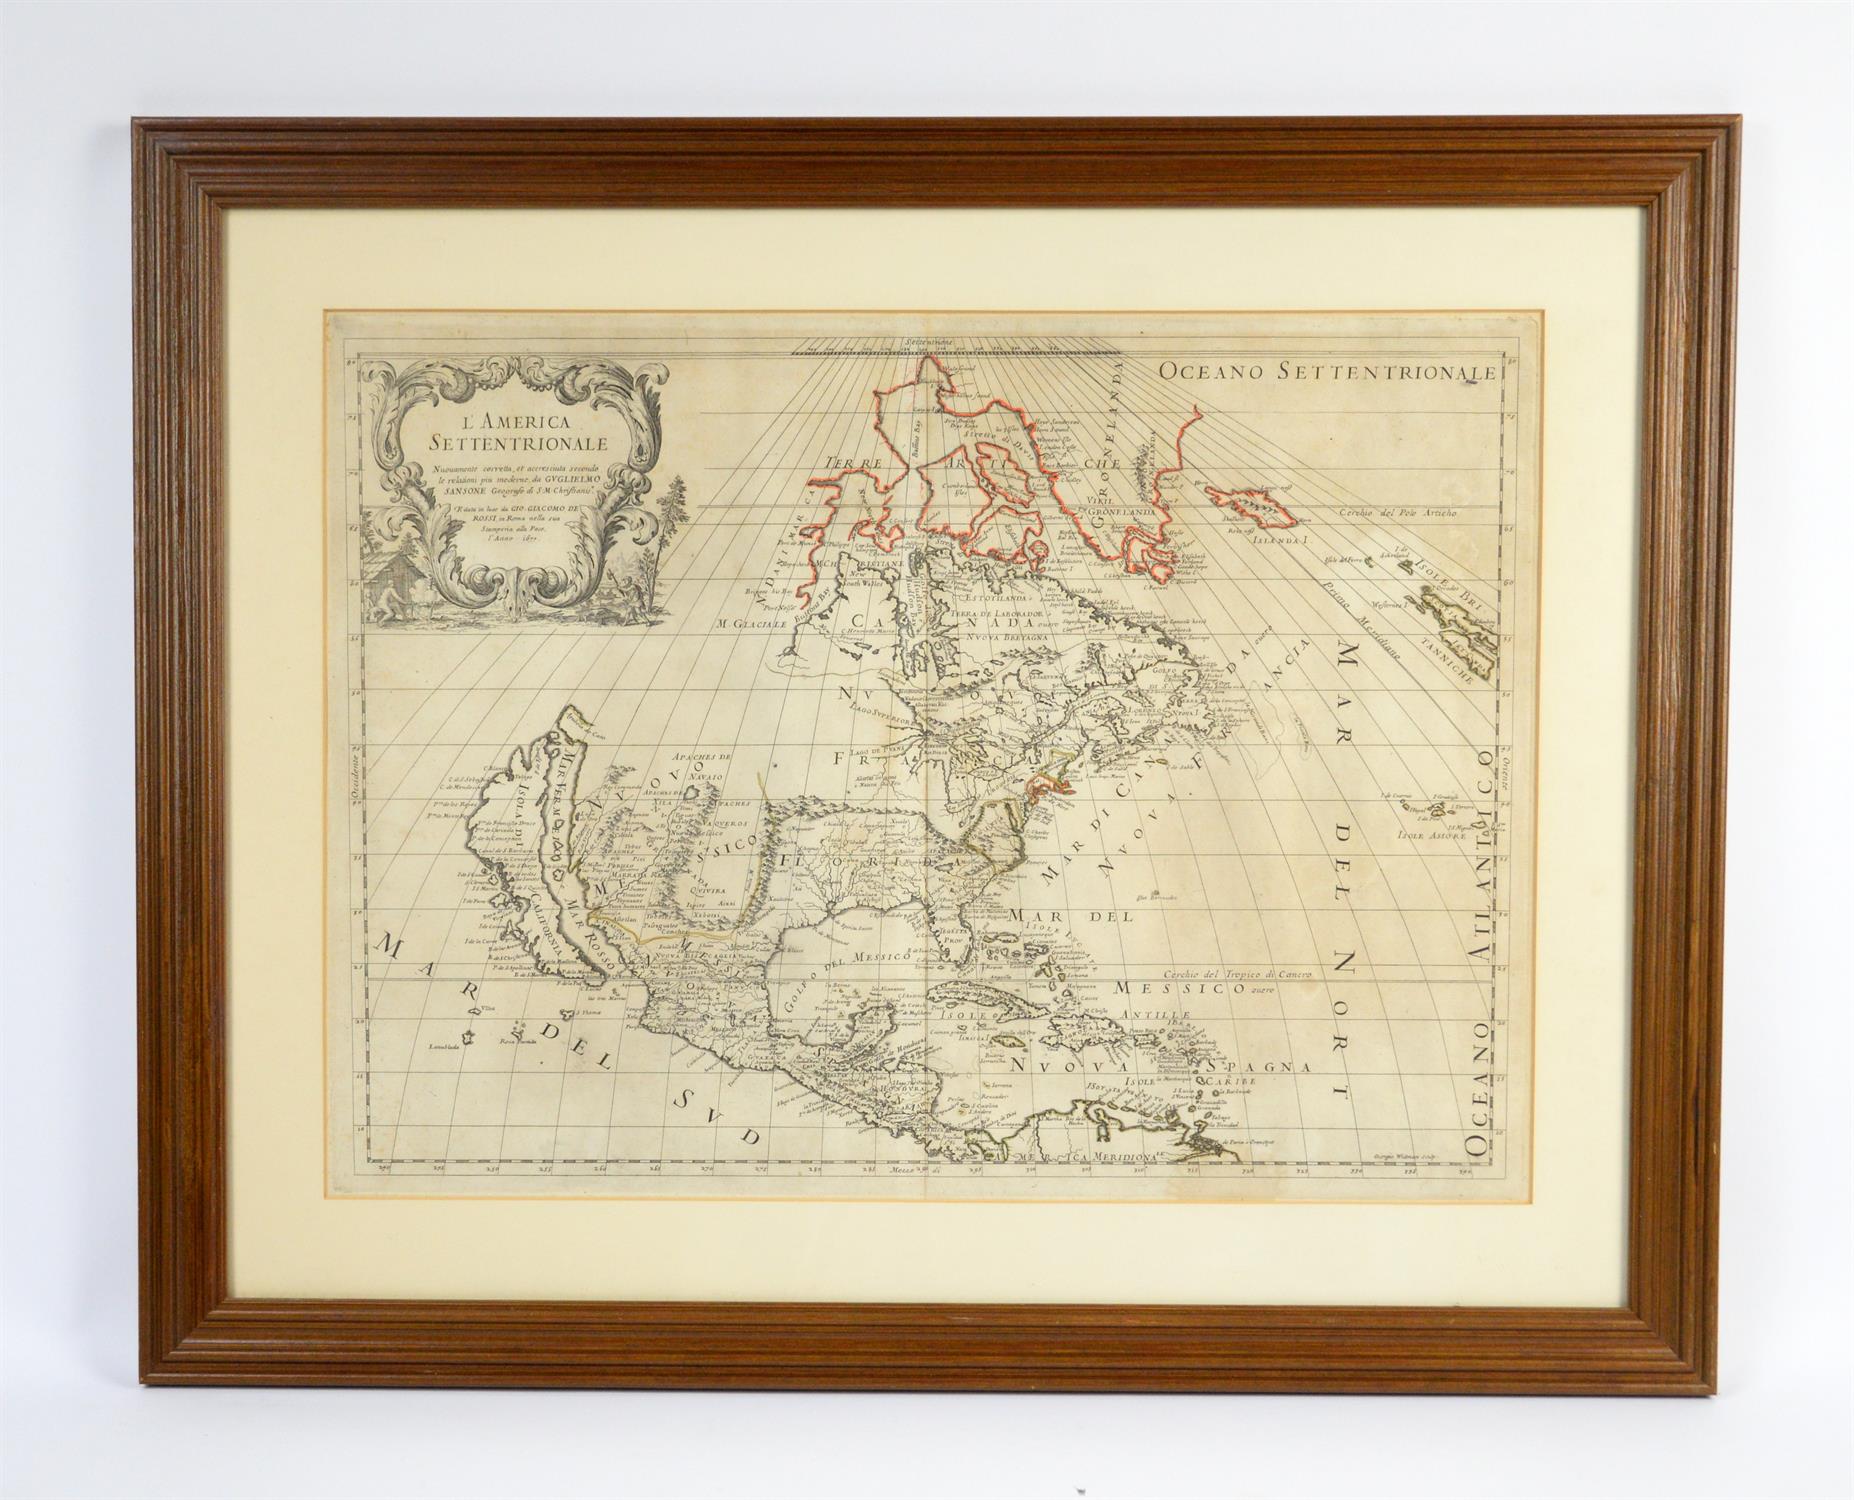 After Guglielmo Sansone, 'L'America Settentrionale', two restrike maps of America, - Image 2 of 2